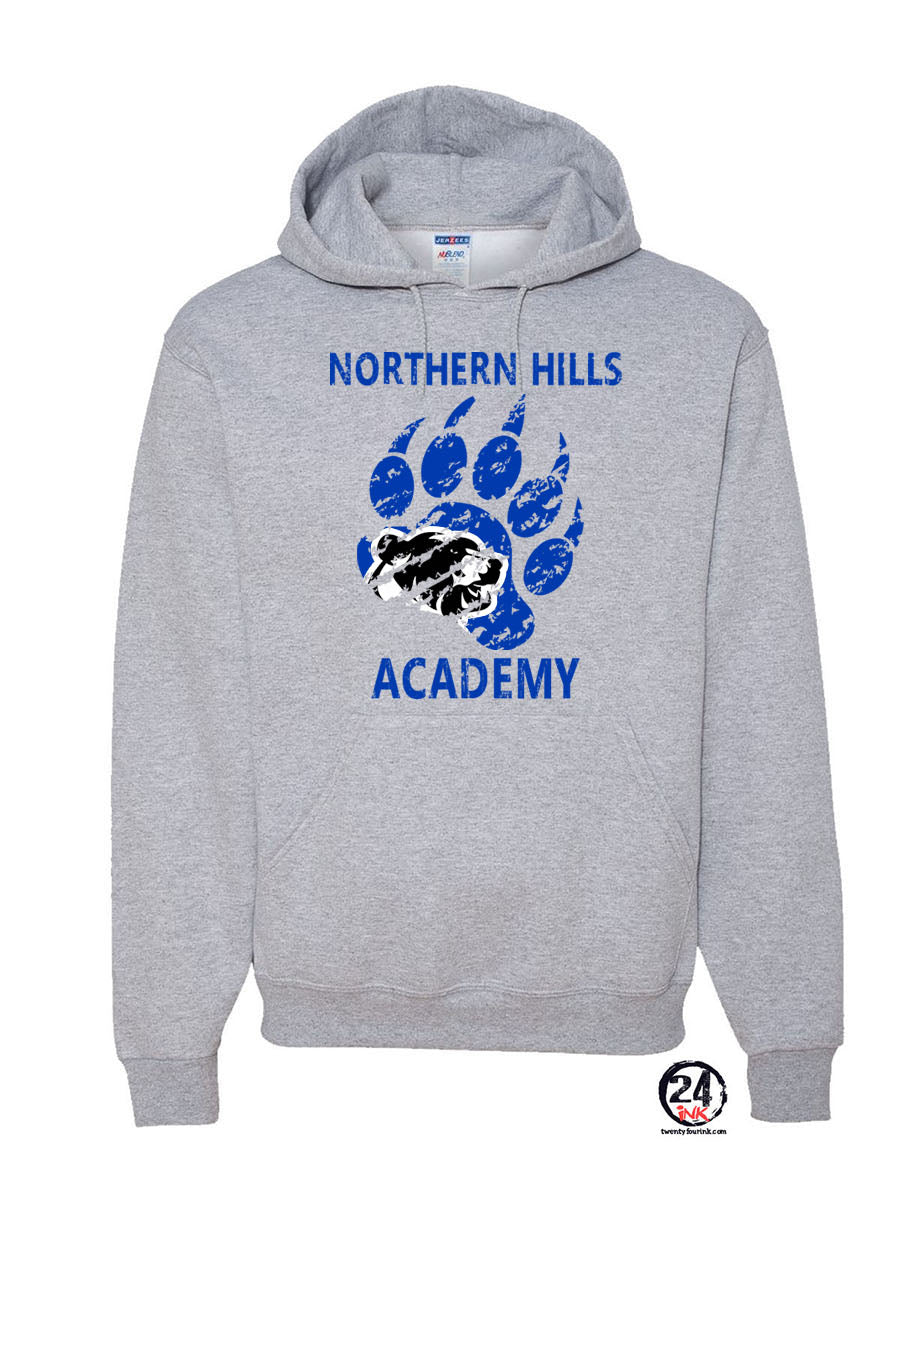 Northern Hills Design 3 Hooded Sweatshirt